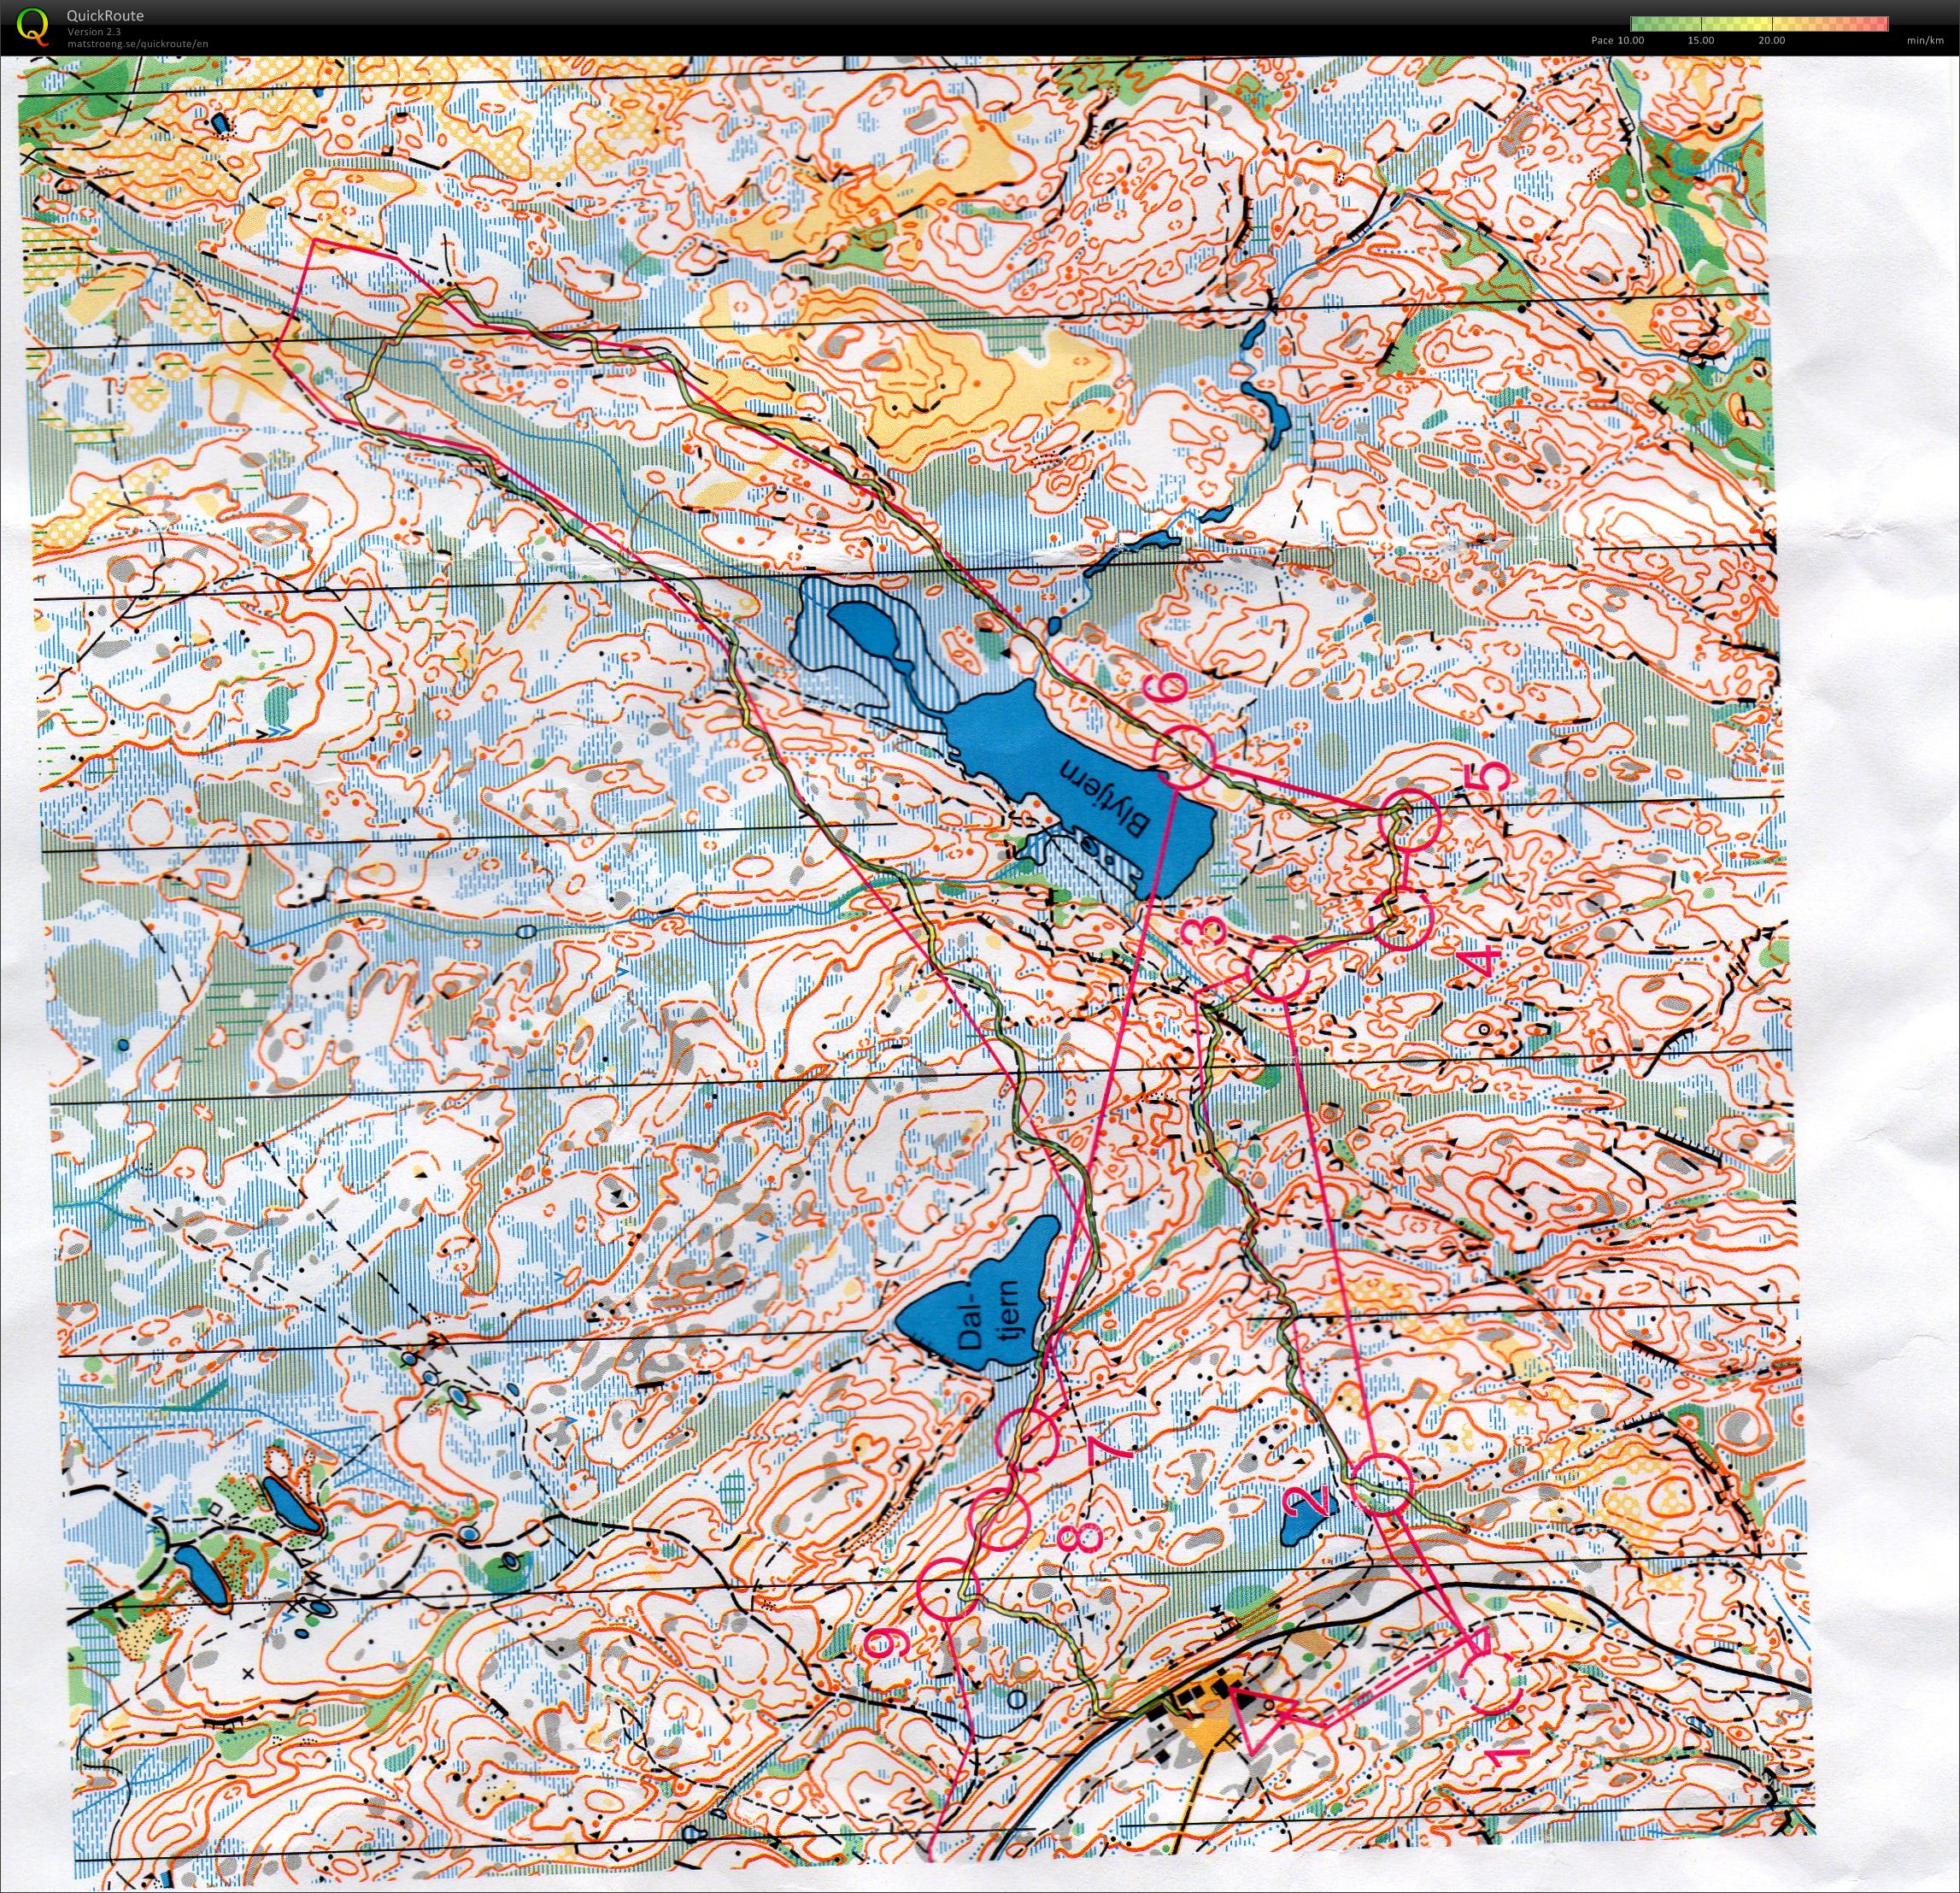 Løpetur på kart i høiåsmarka (2011-11-04)